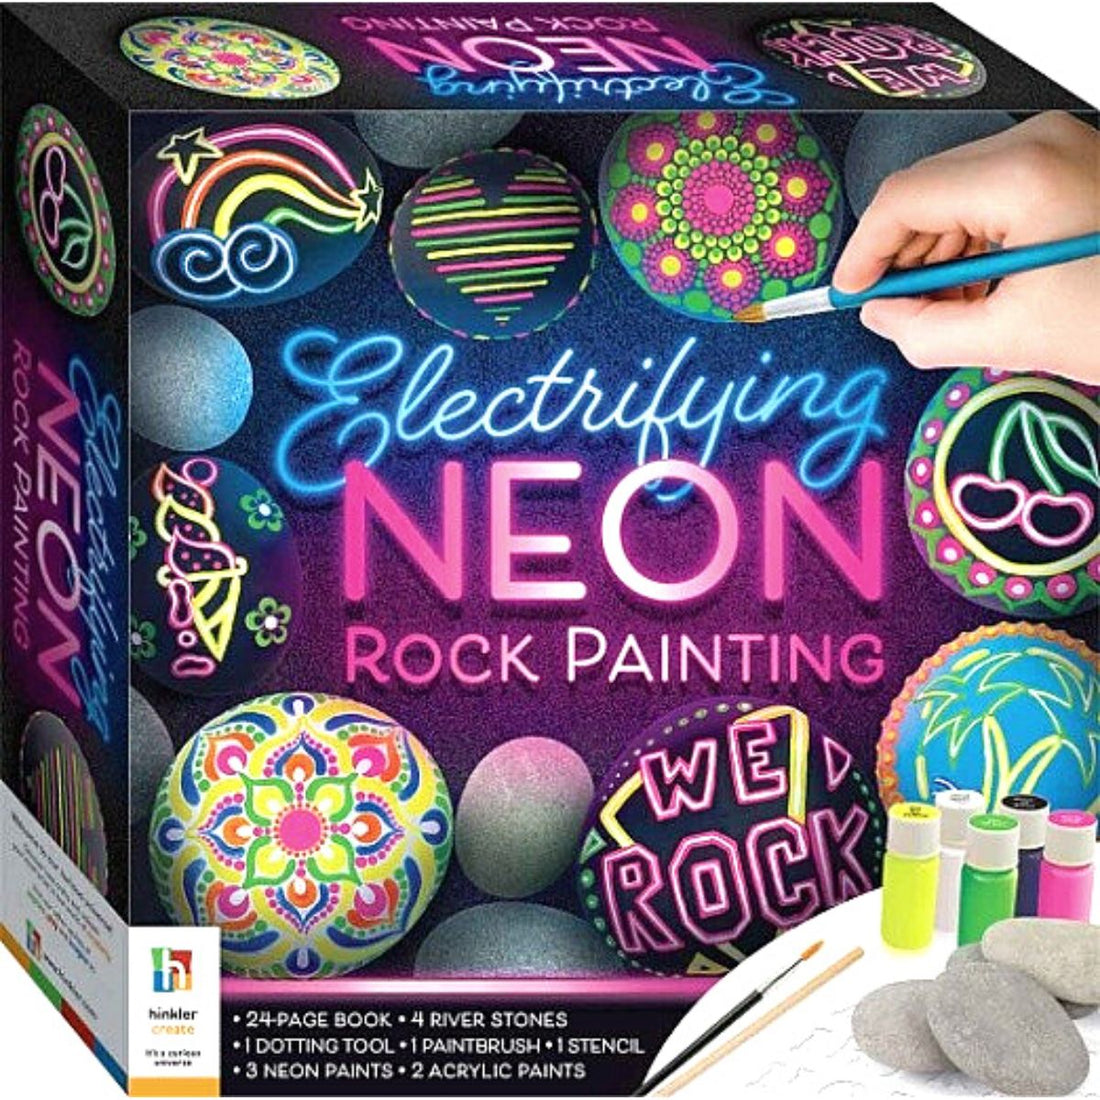 Electrifying Neon Rock PaintingActivity Kit